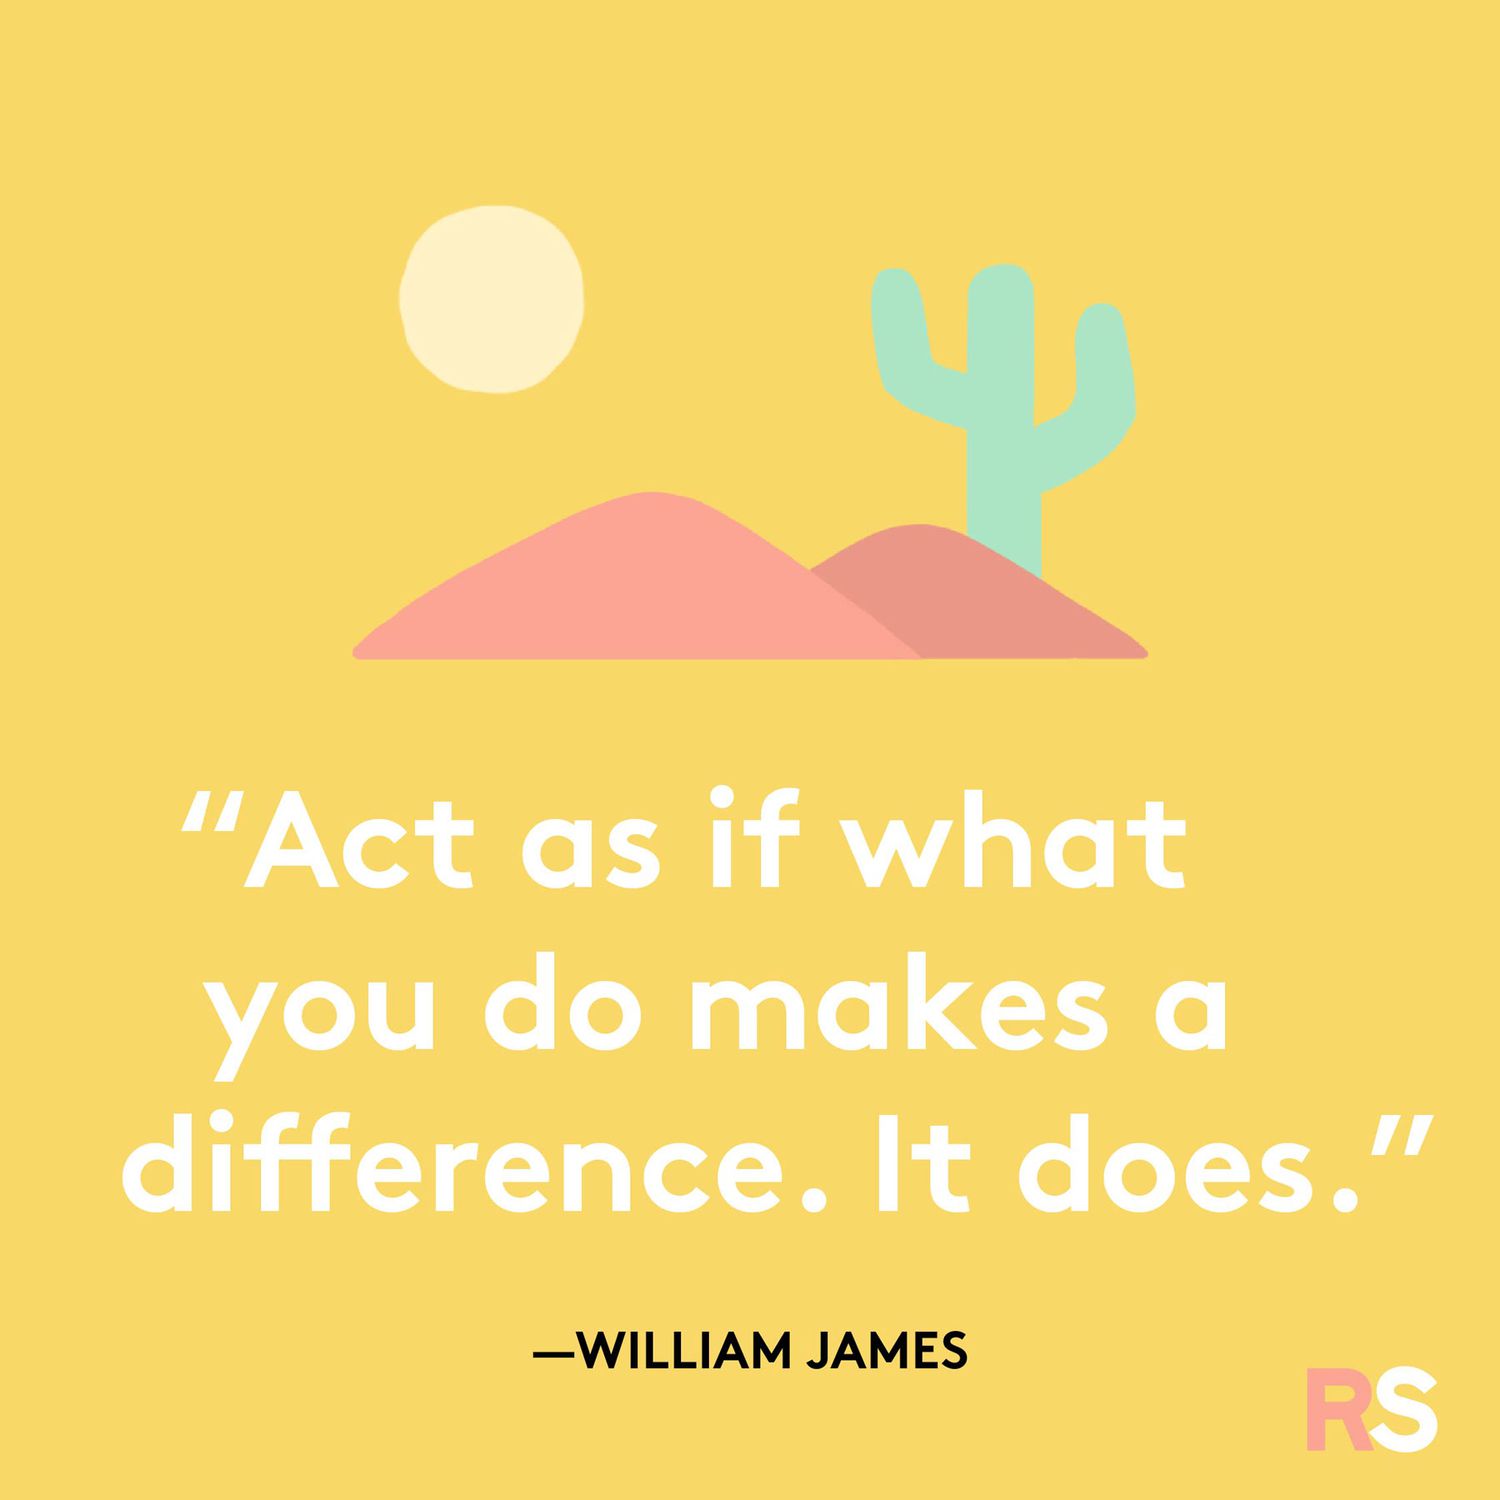 Positive motivating quotes, captions, messages – William James quote